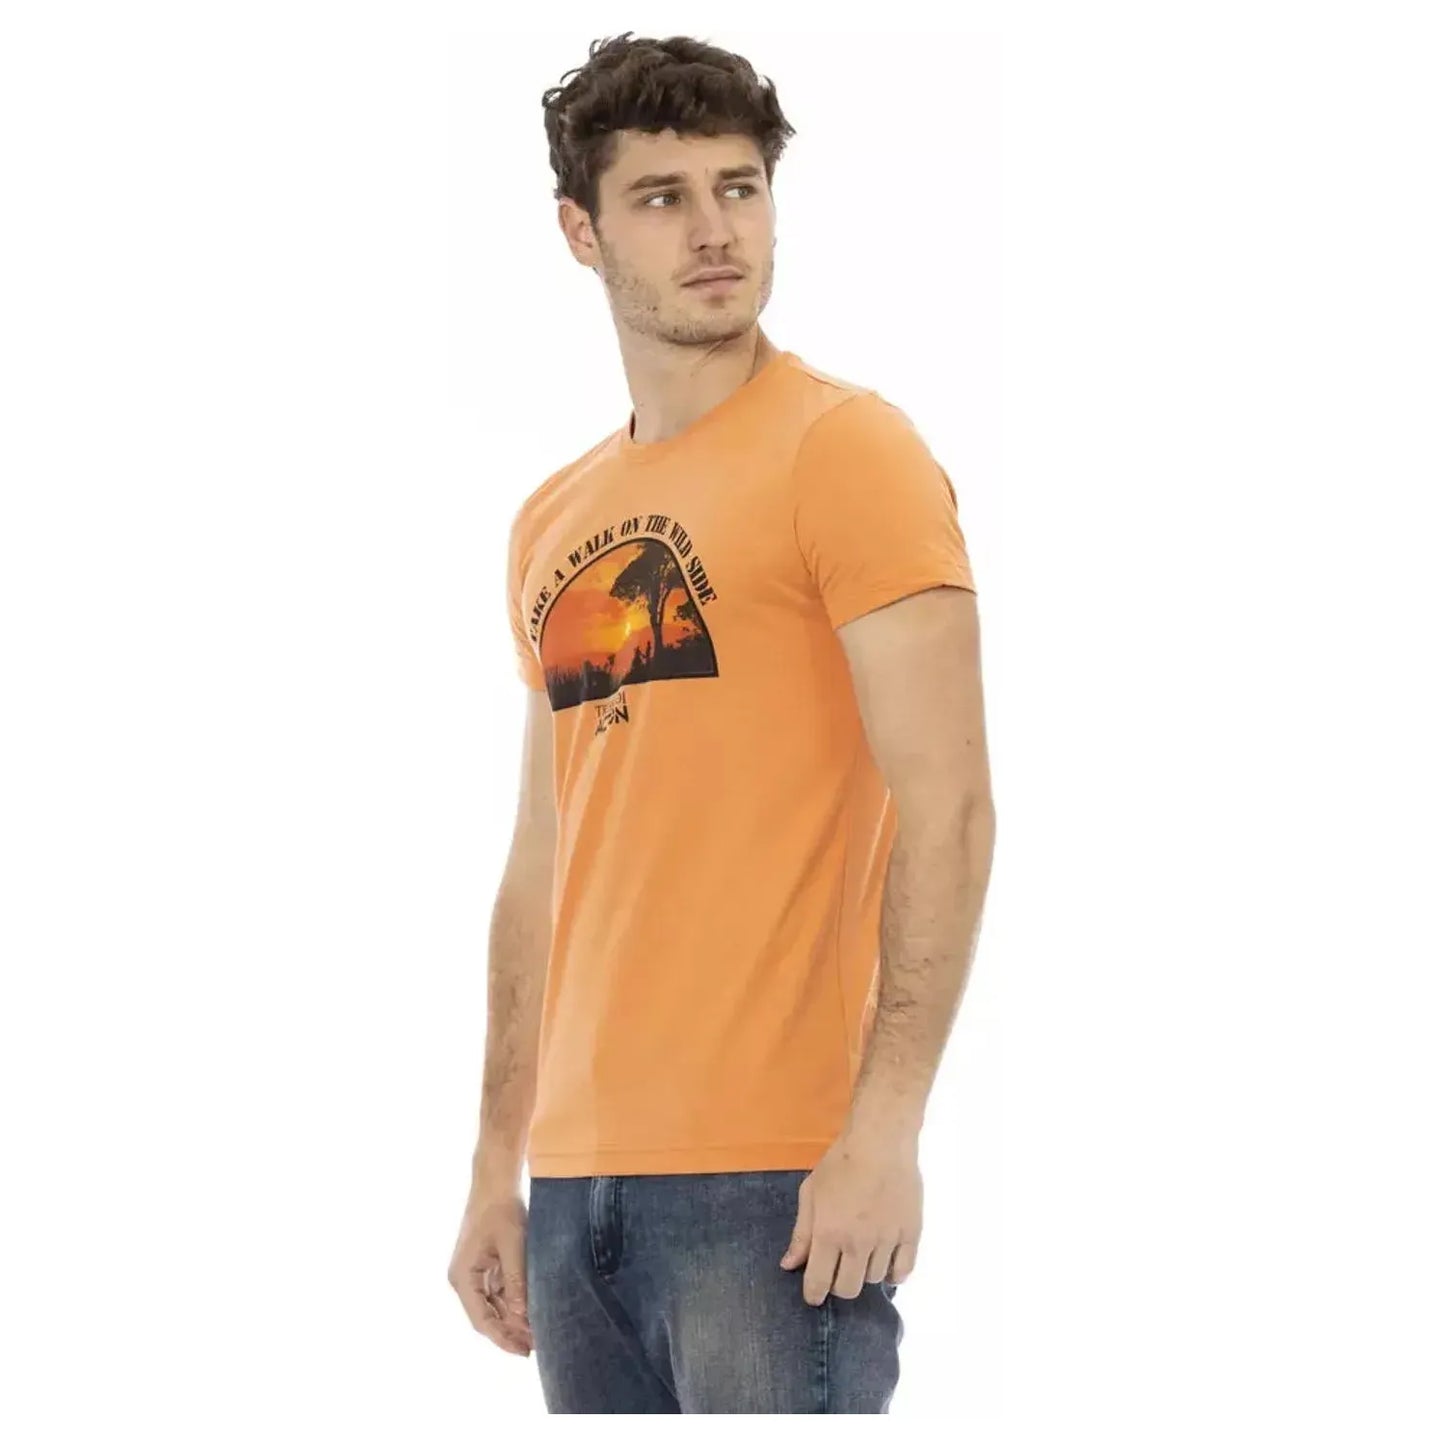 Trussardi Action Chic Orange Printed Short Sleeve Tee orange-cotton-t-shirt-28 product-22678-1417252568-25-d0c3a82d-9cb.webp